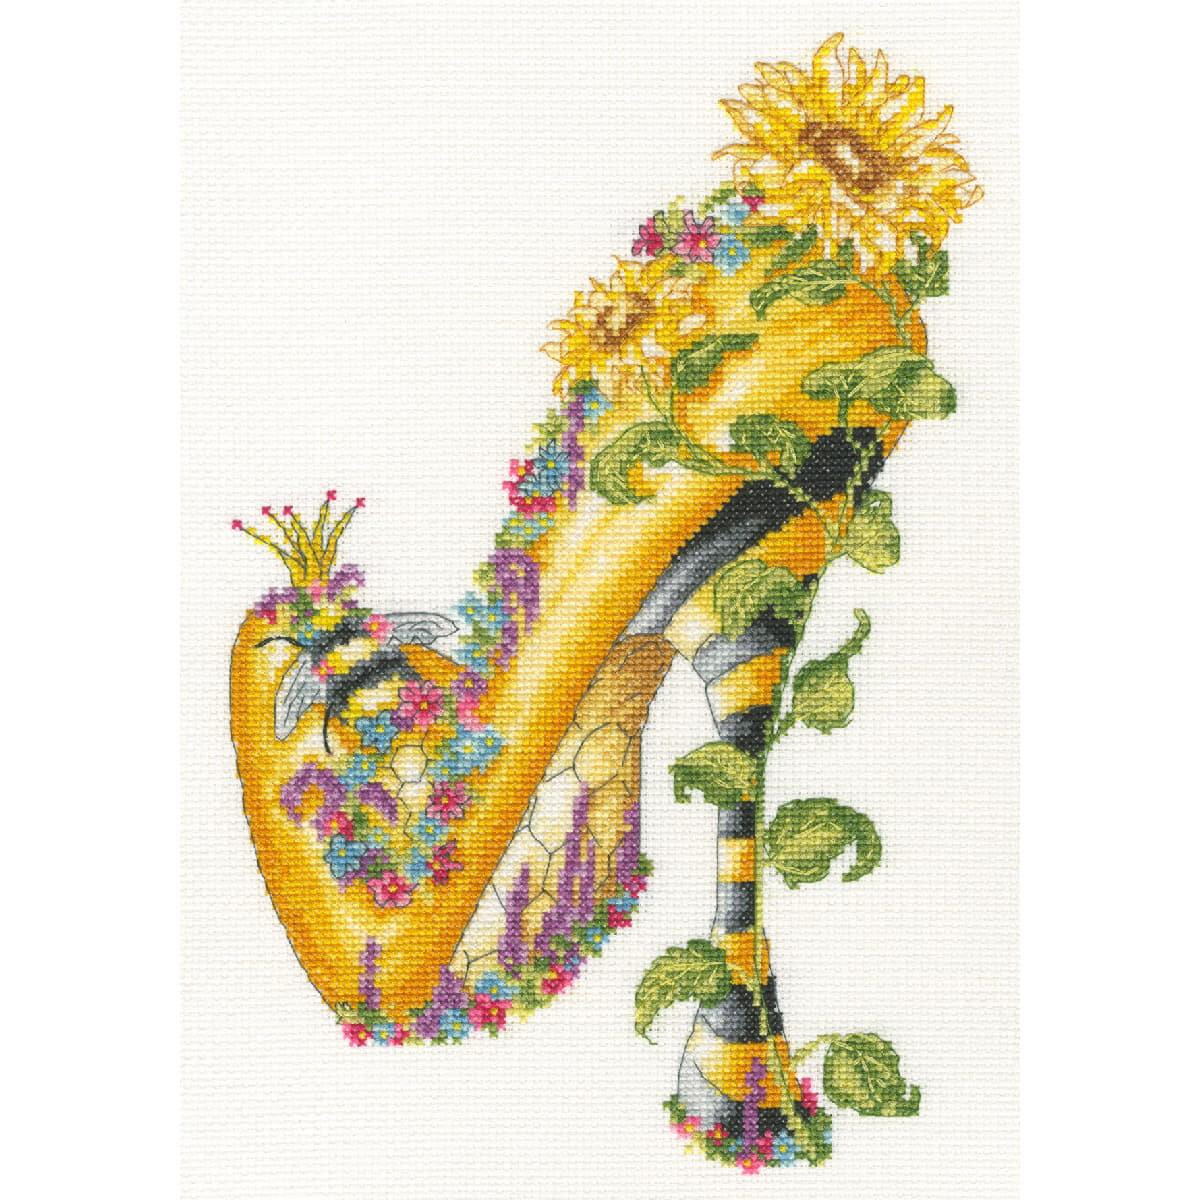 A vibrant cross stitch design of a yellow high heel...